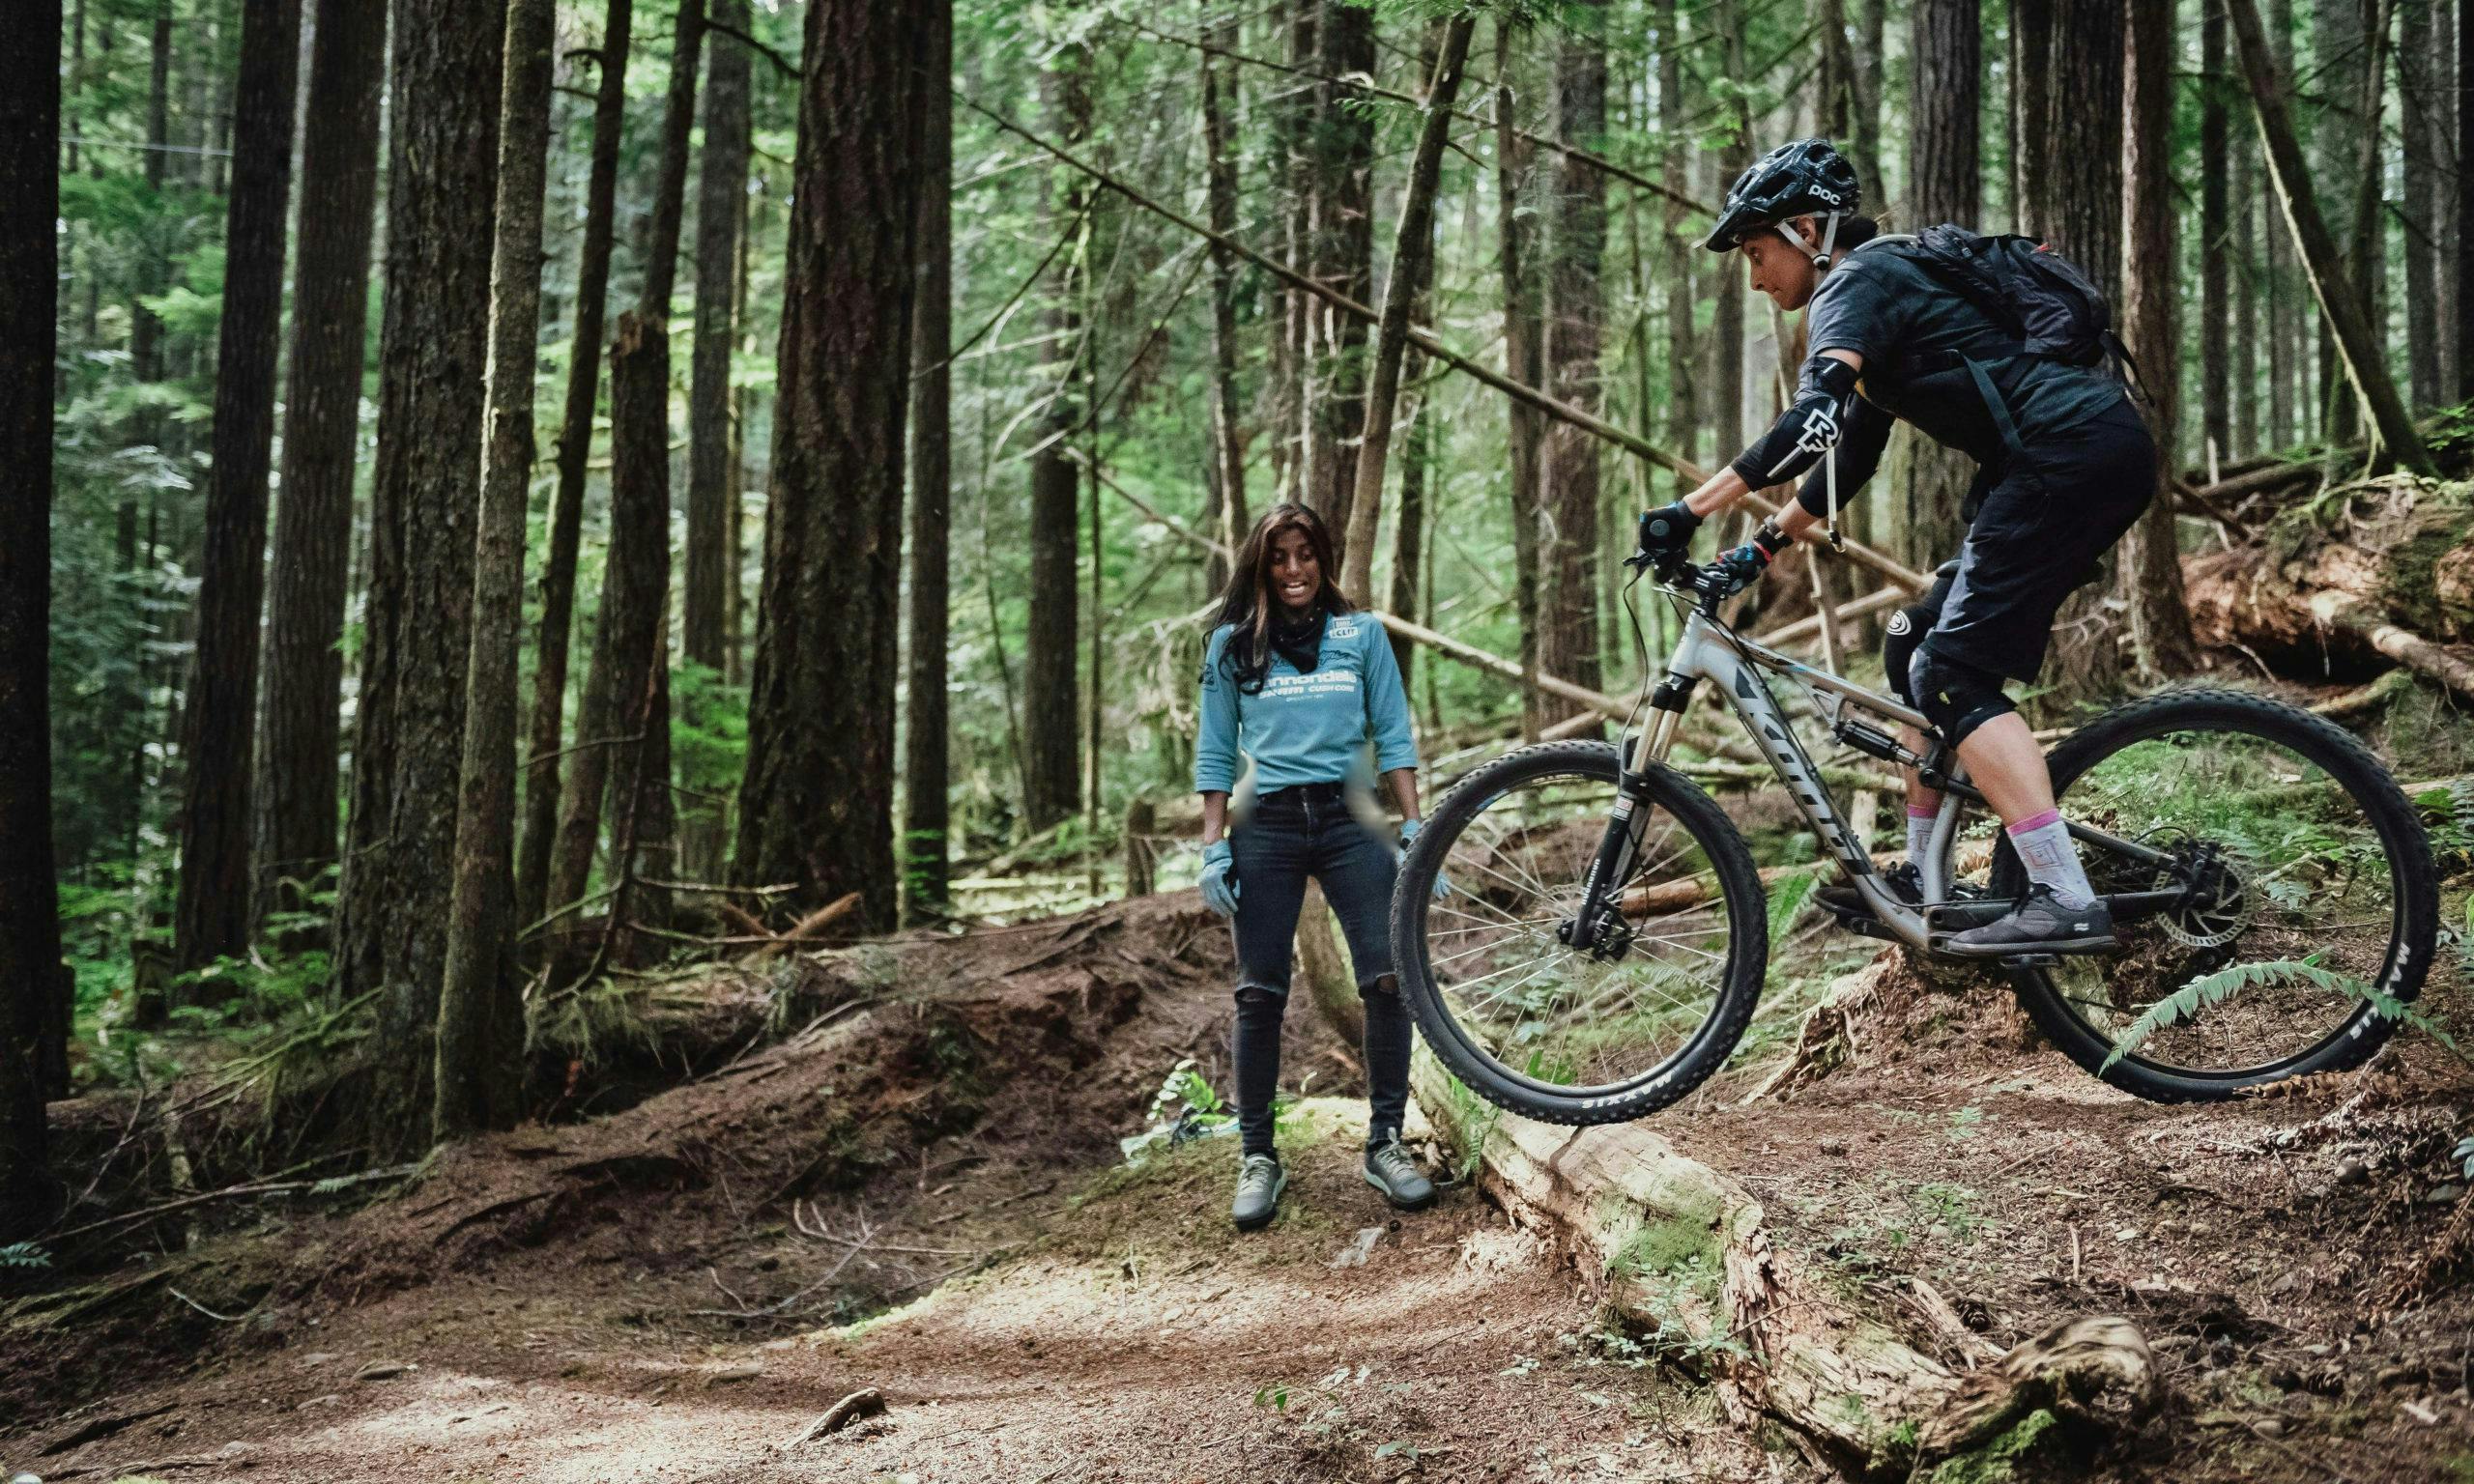 Anita coaching a mountain biker over a drop on a trail